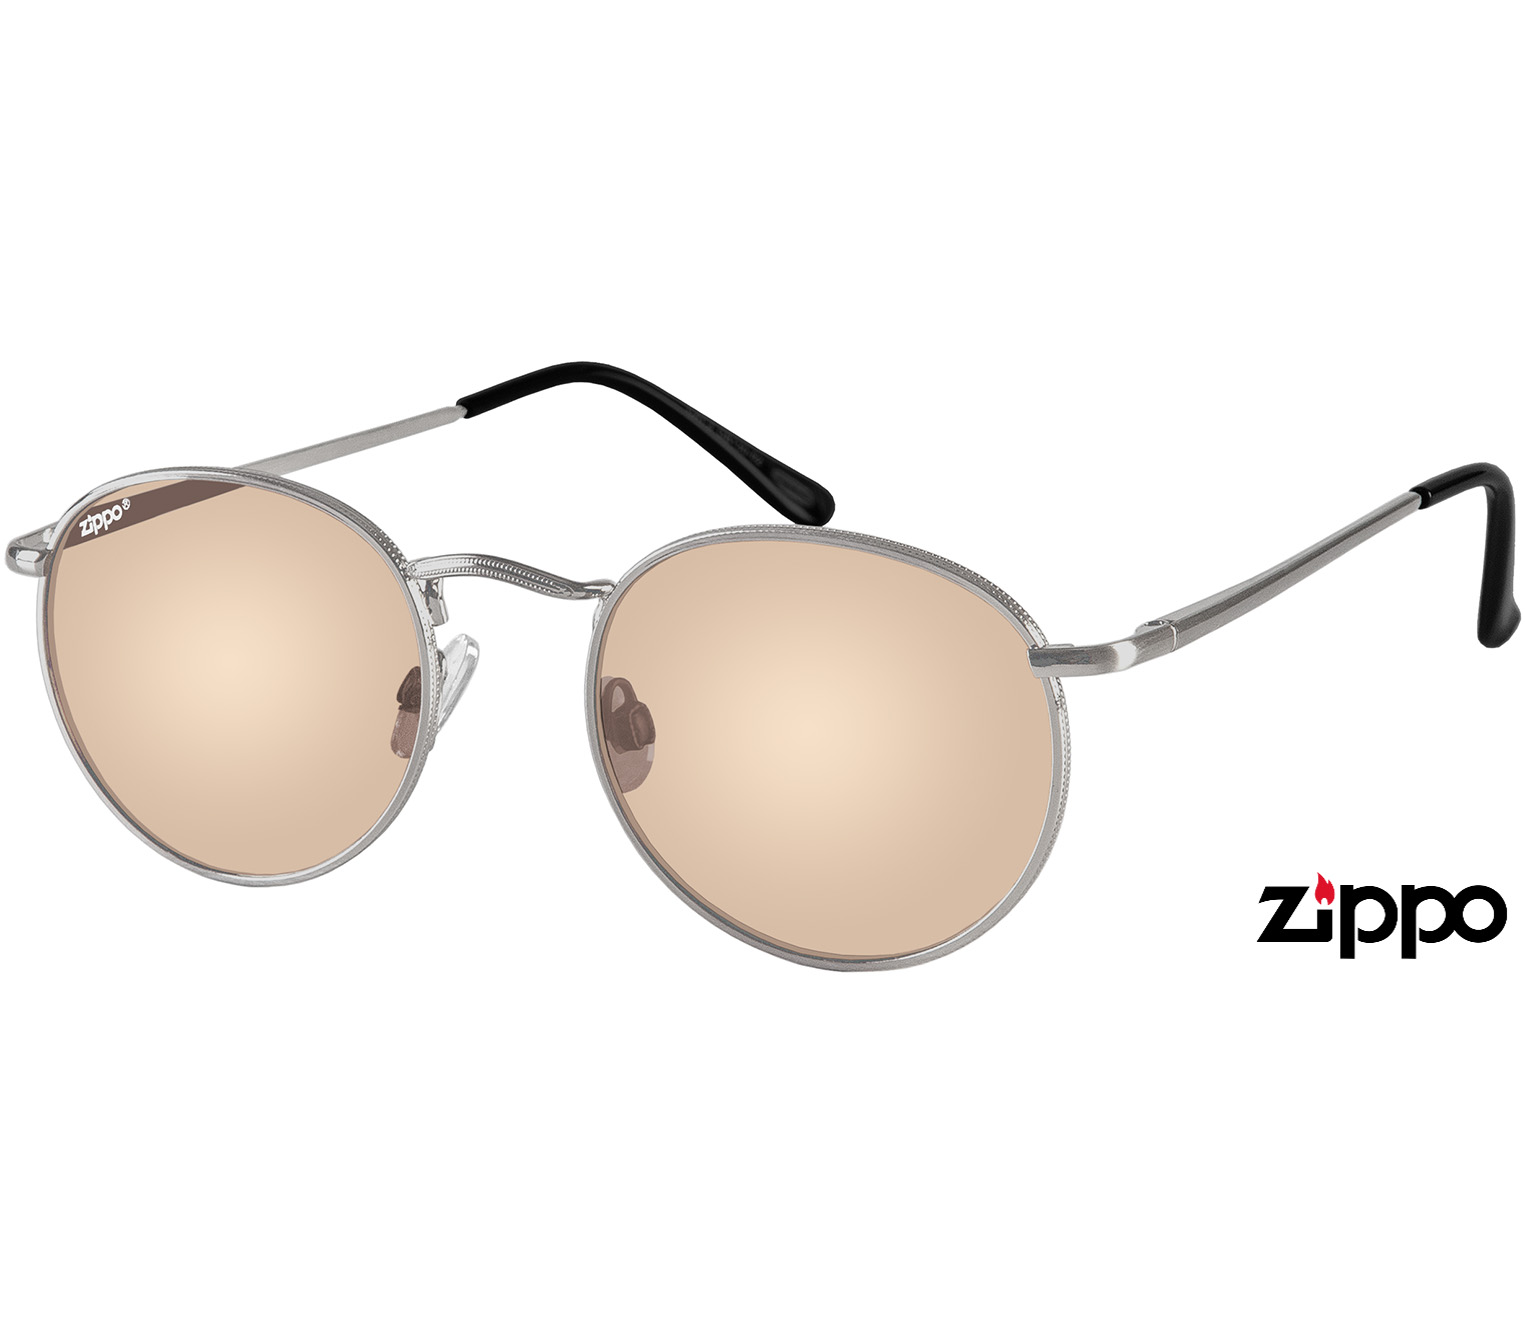 Main Image (Angle) - Tresco (Silver) Retro Sunglasses